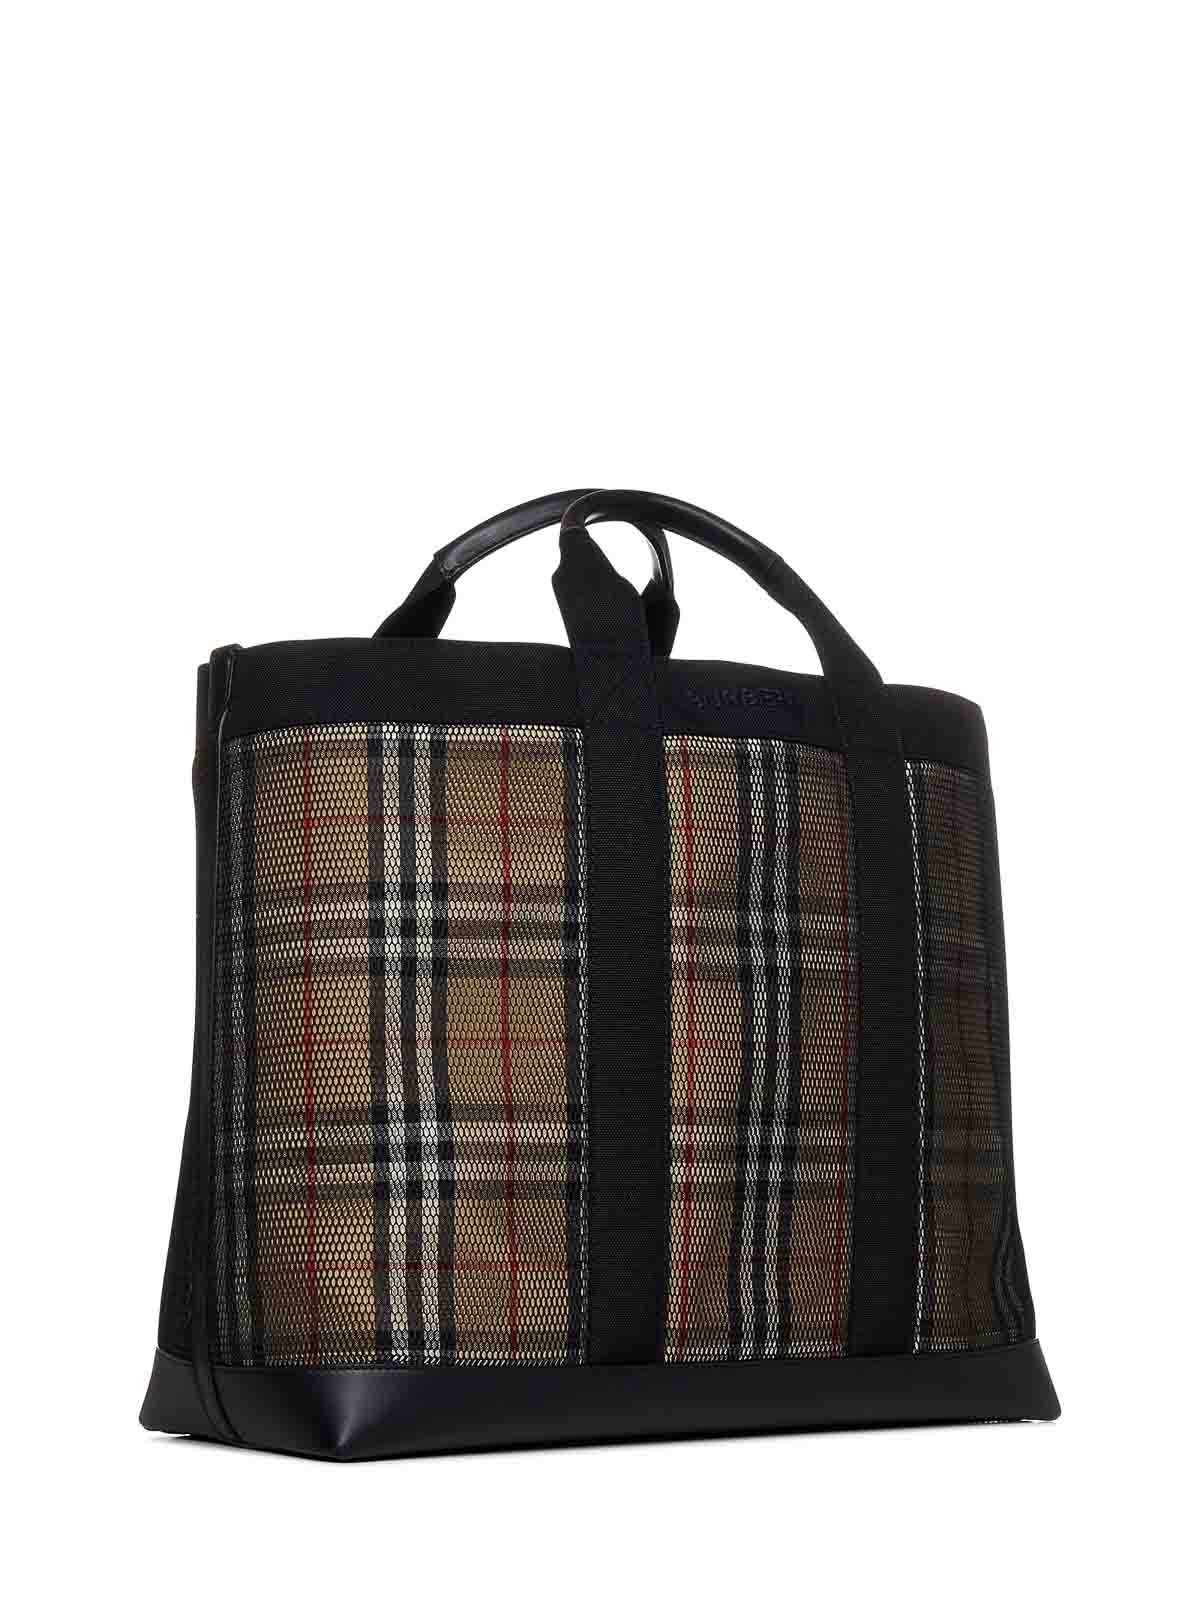 Burberry Black/Beige Tote Bag